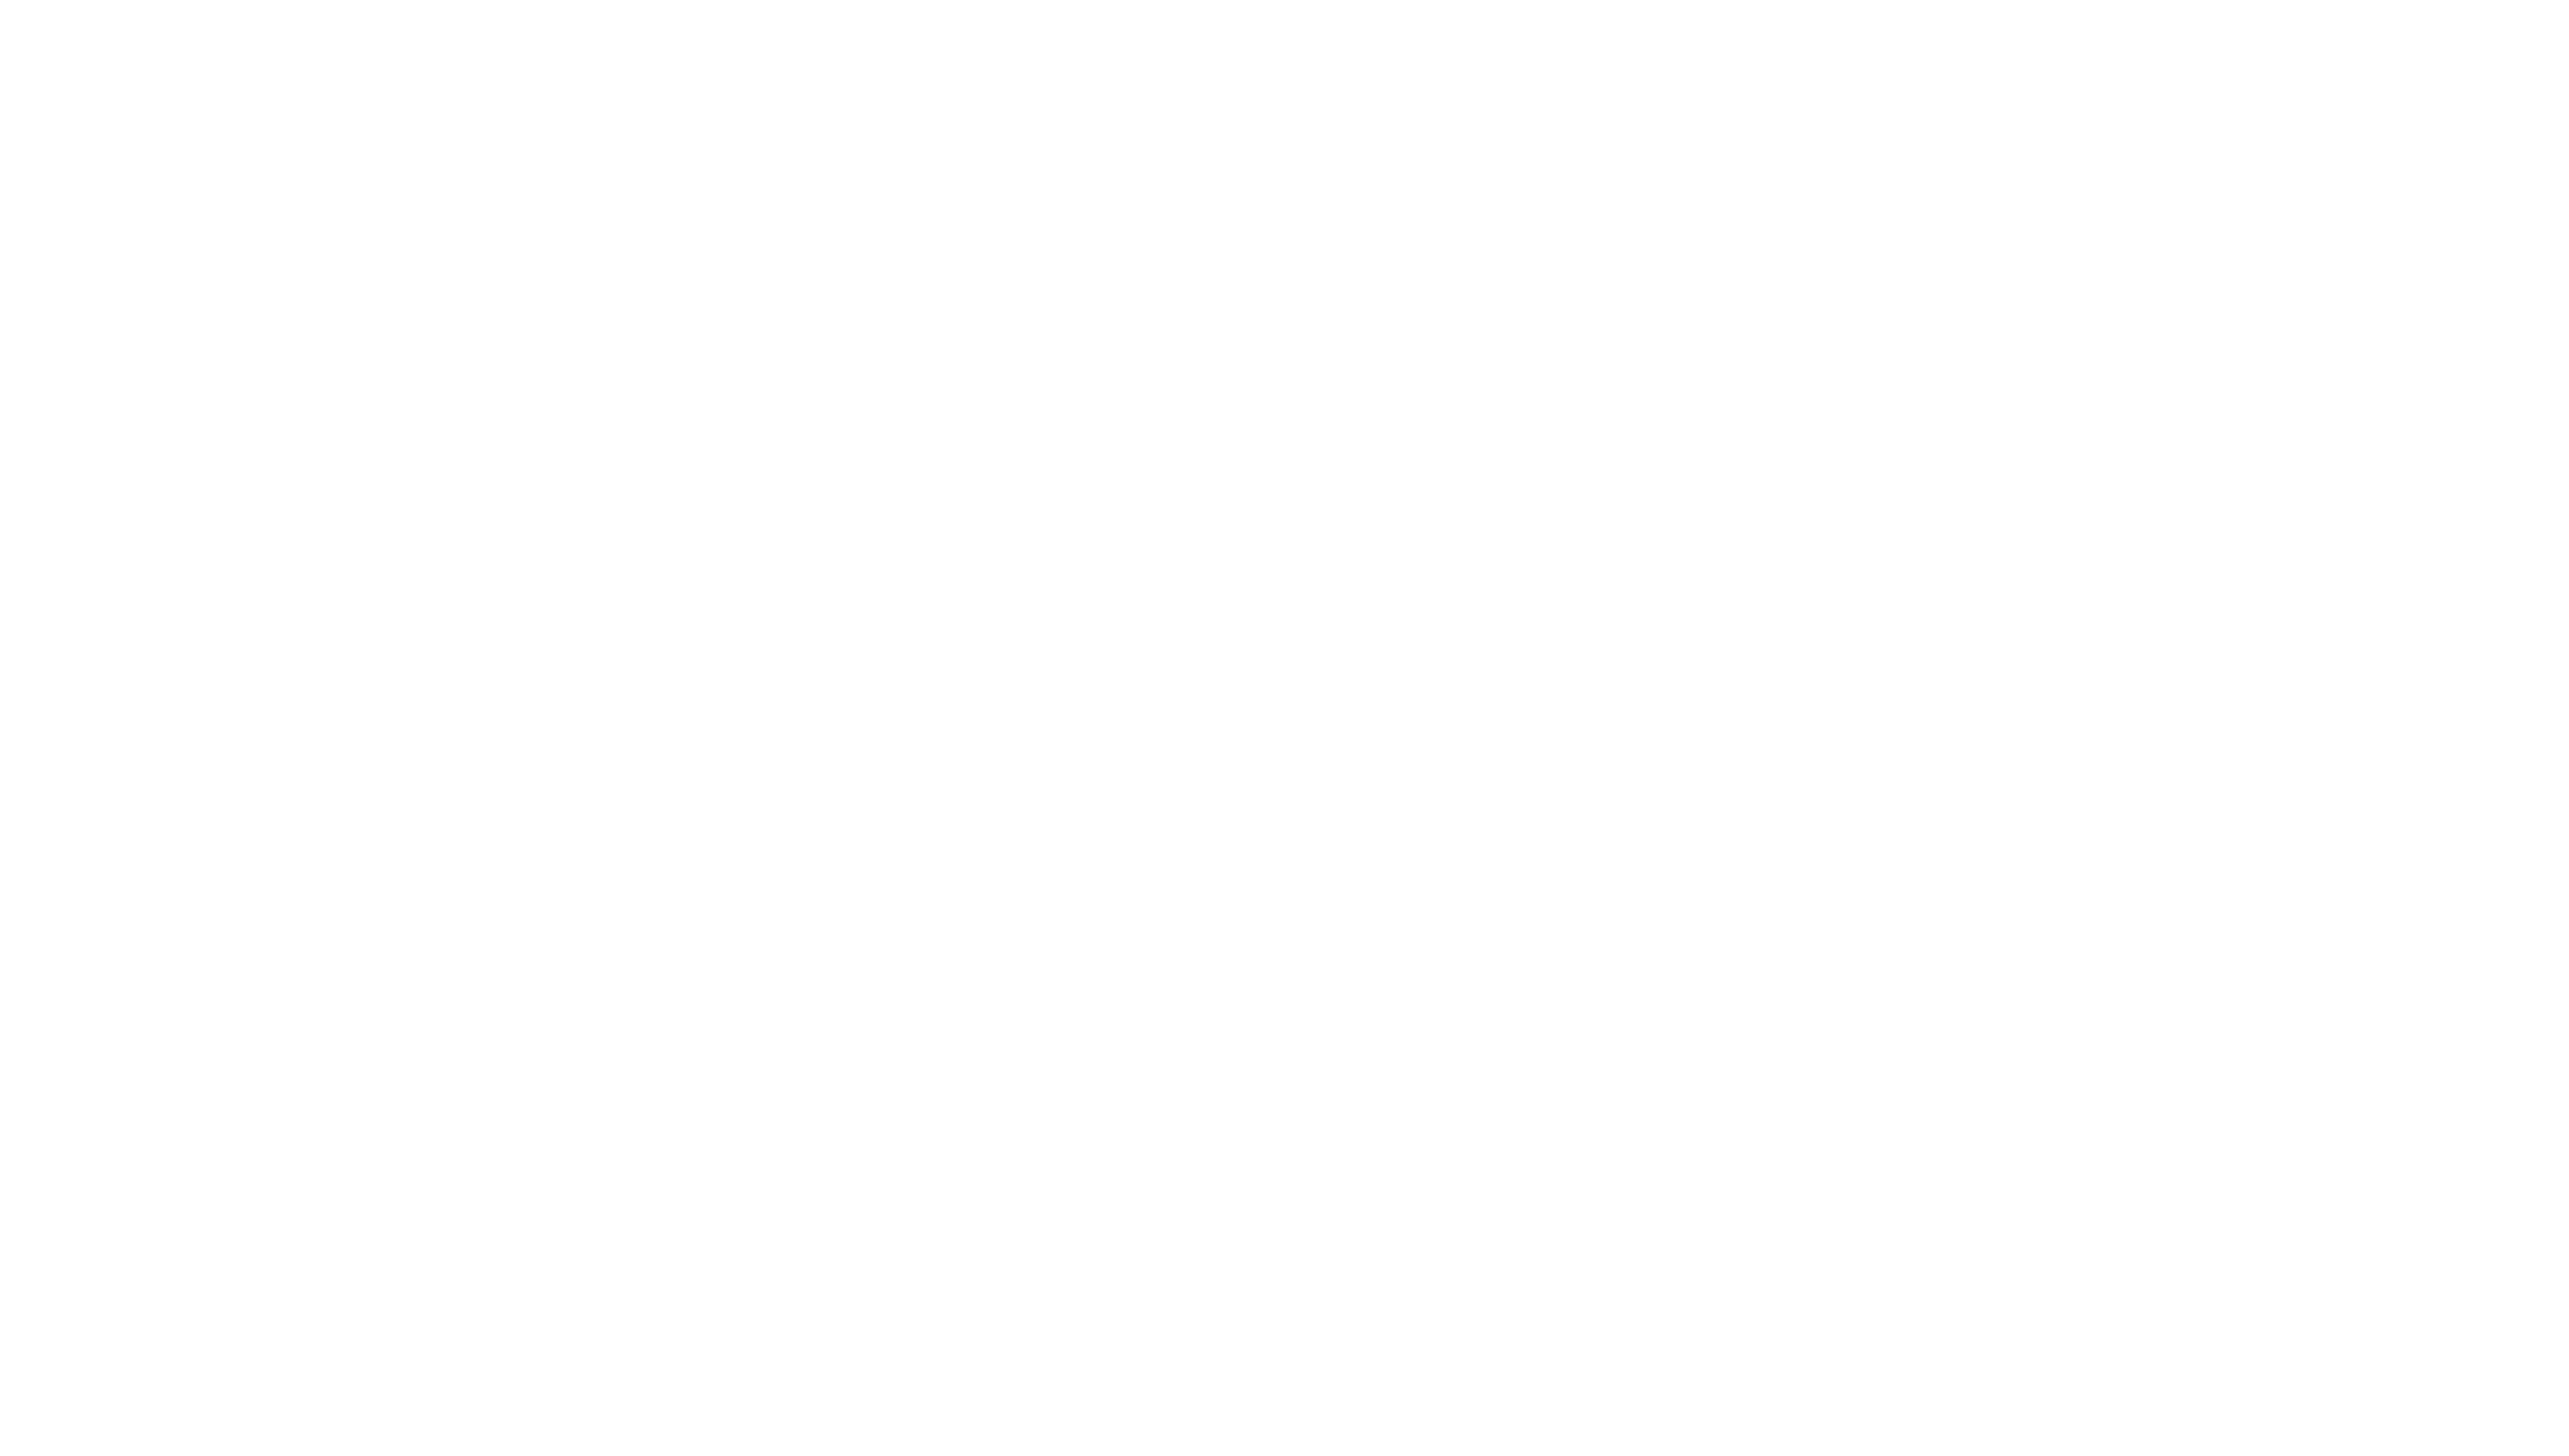 Dark Dice